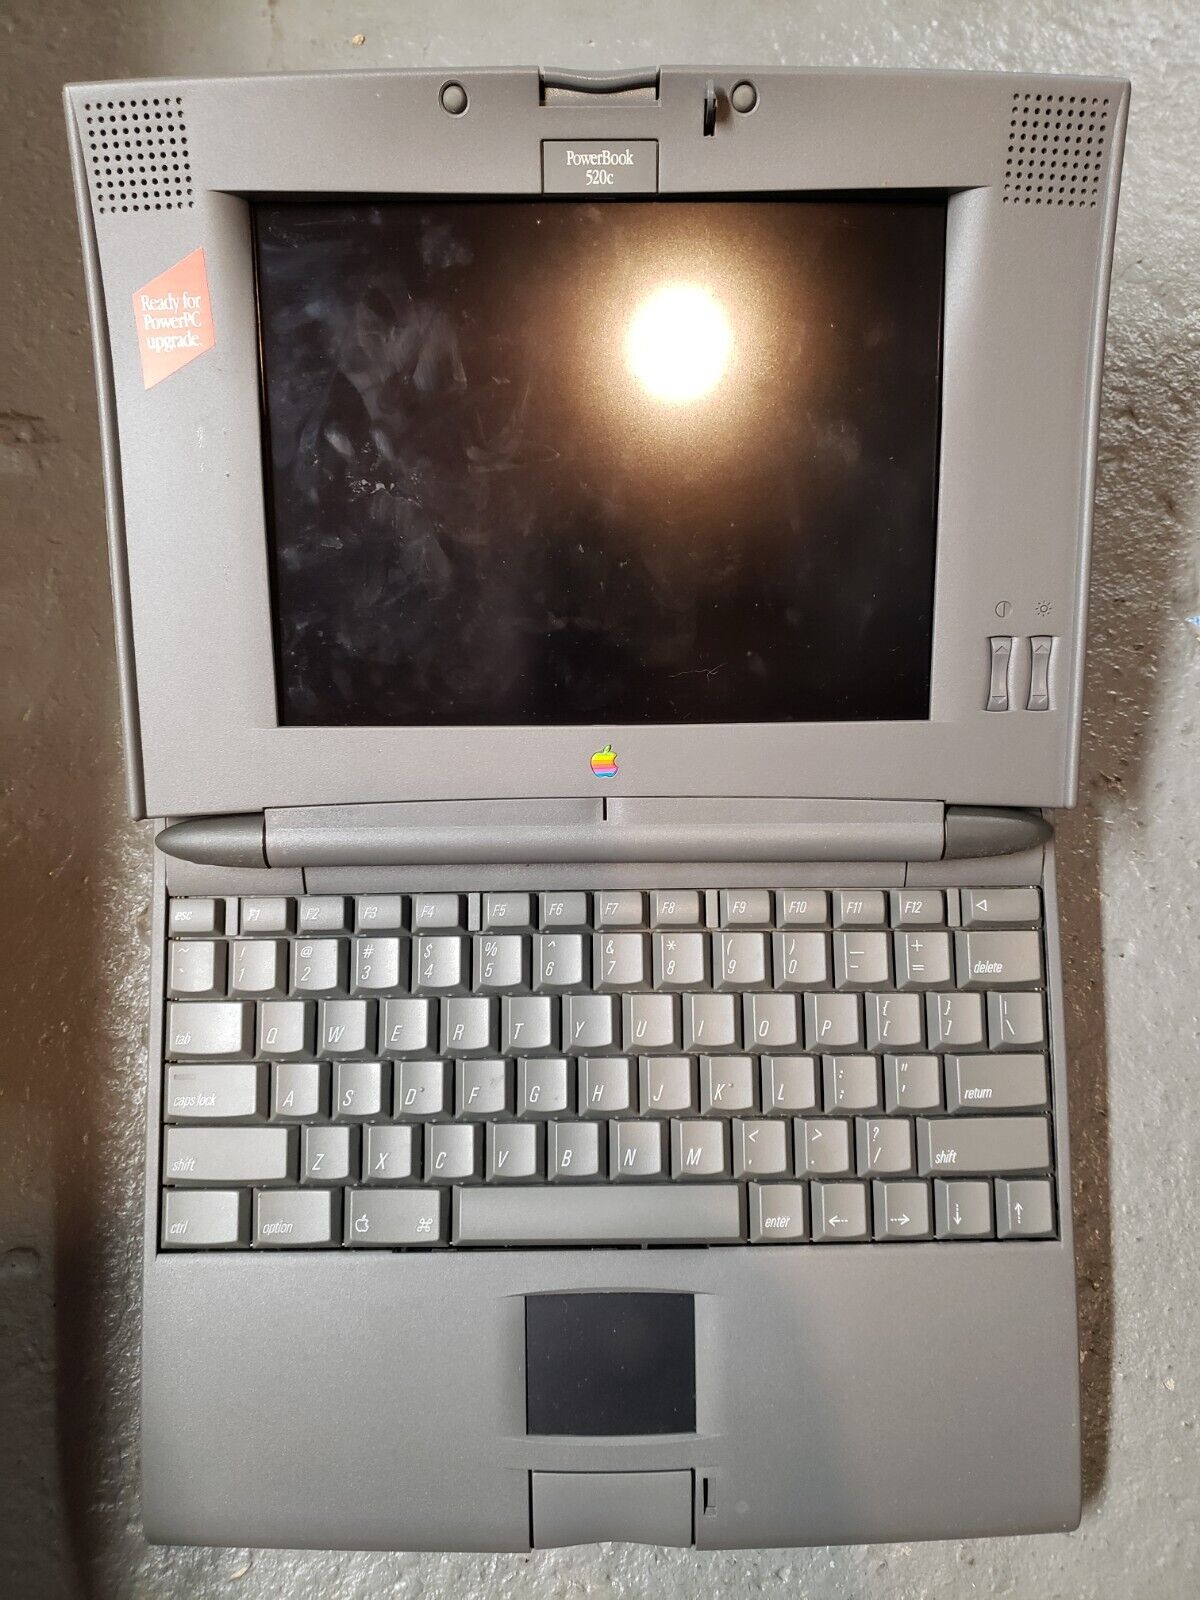 Vintage Apple Powerbook 520c Laptop - UNTESTED, READ